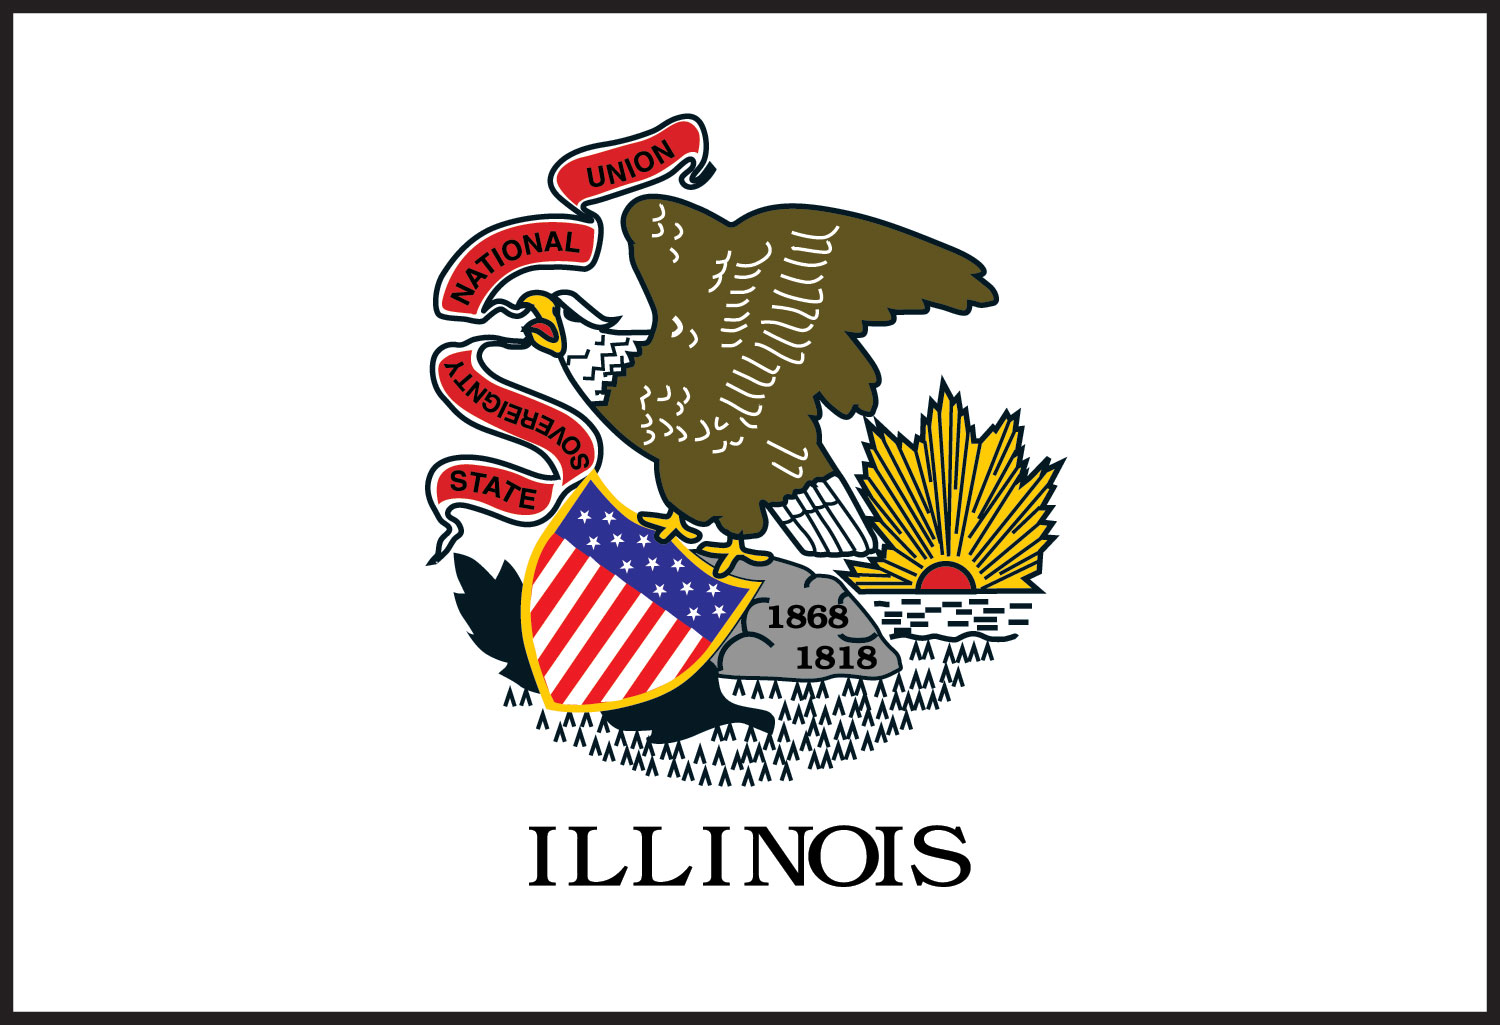 Illinois Prayer of the Day - Today's prayer focuses on the state of Illinois. #Illinois #PrayeroftheDay